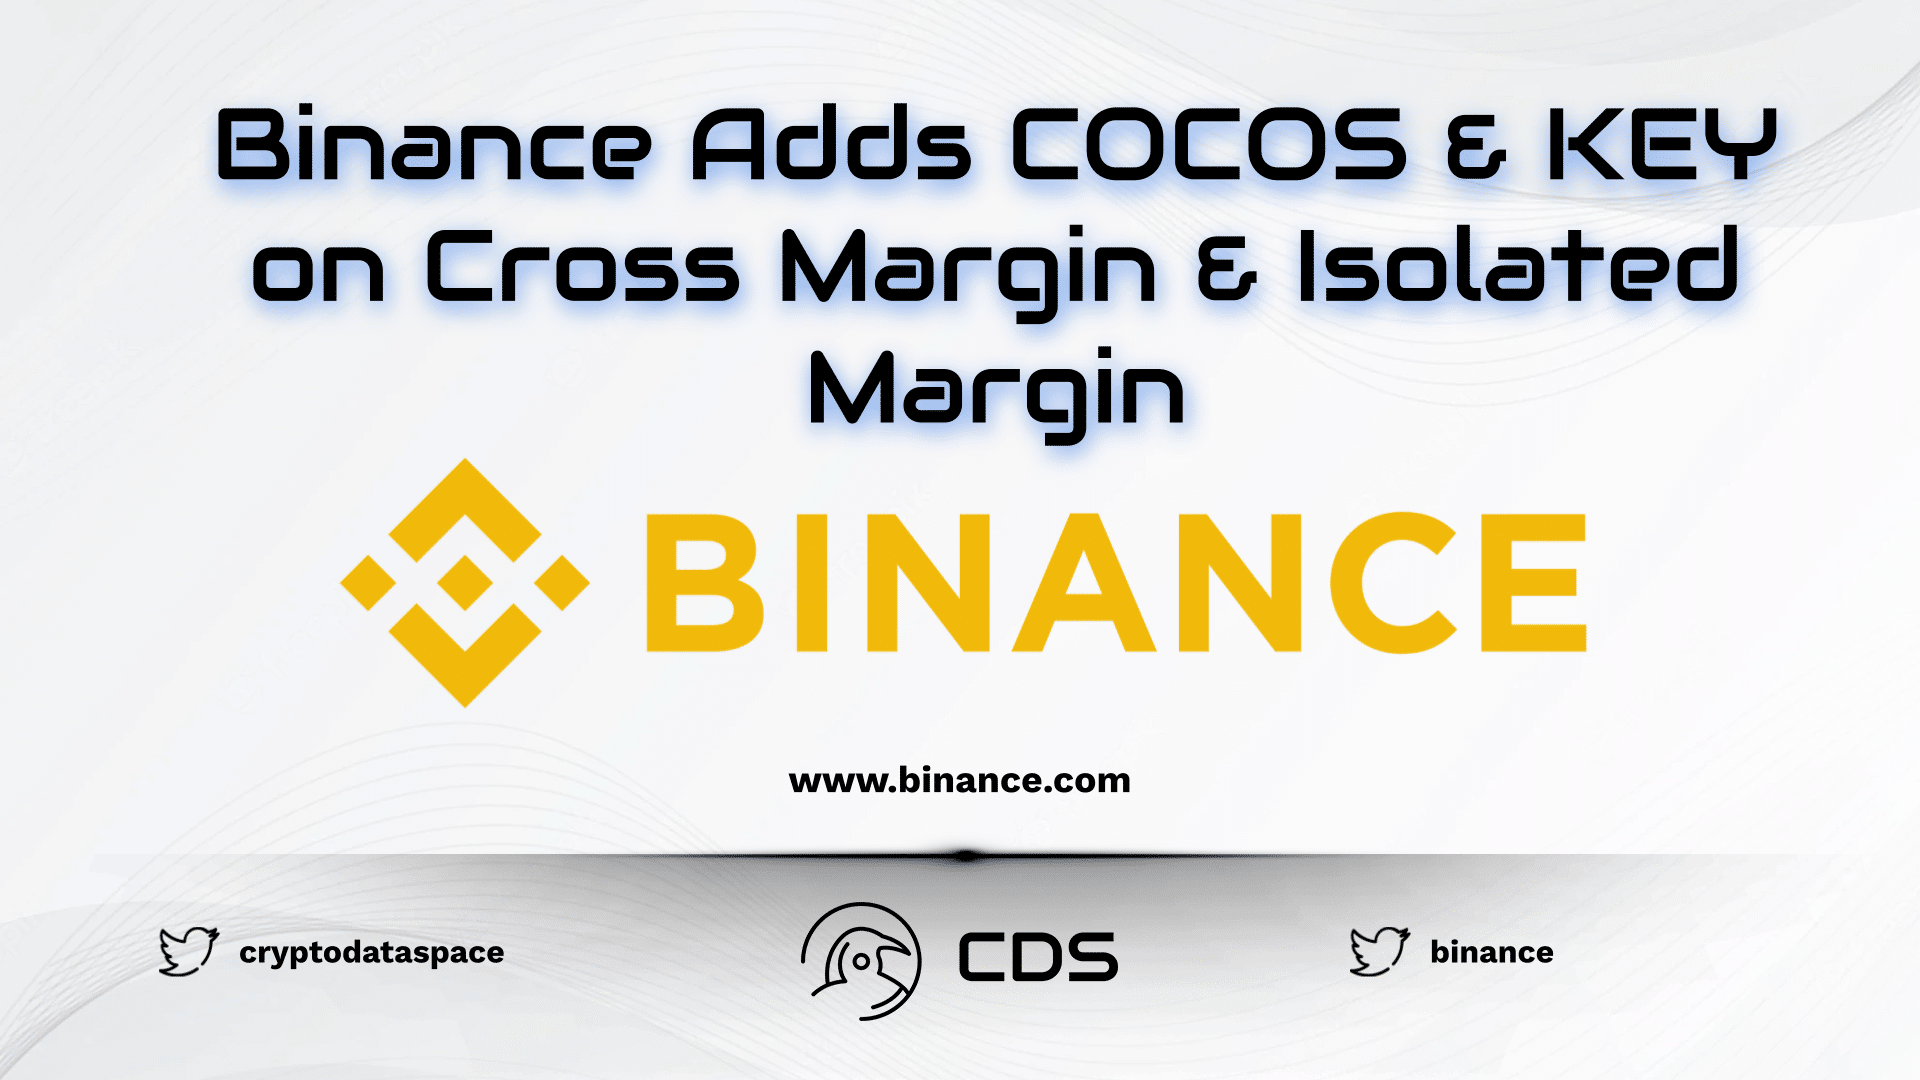 Binance Adds COCOS & KEY on Cross Margin & Isolated Margin